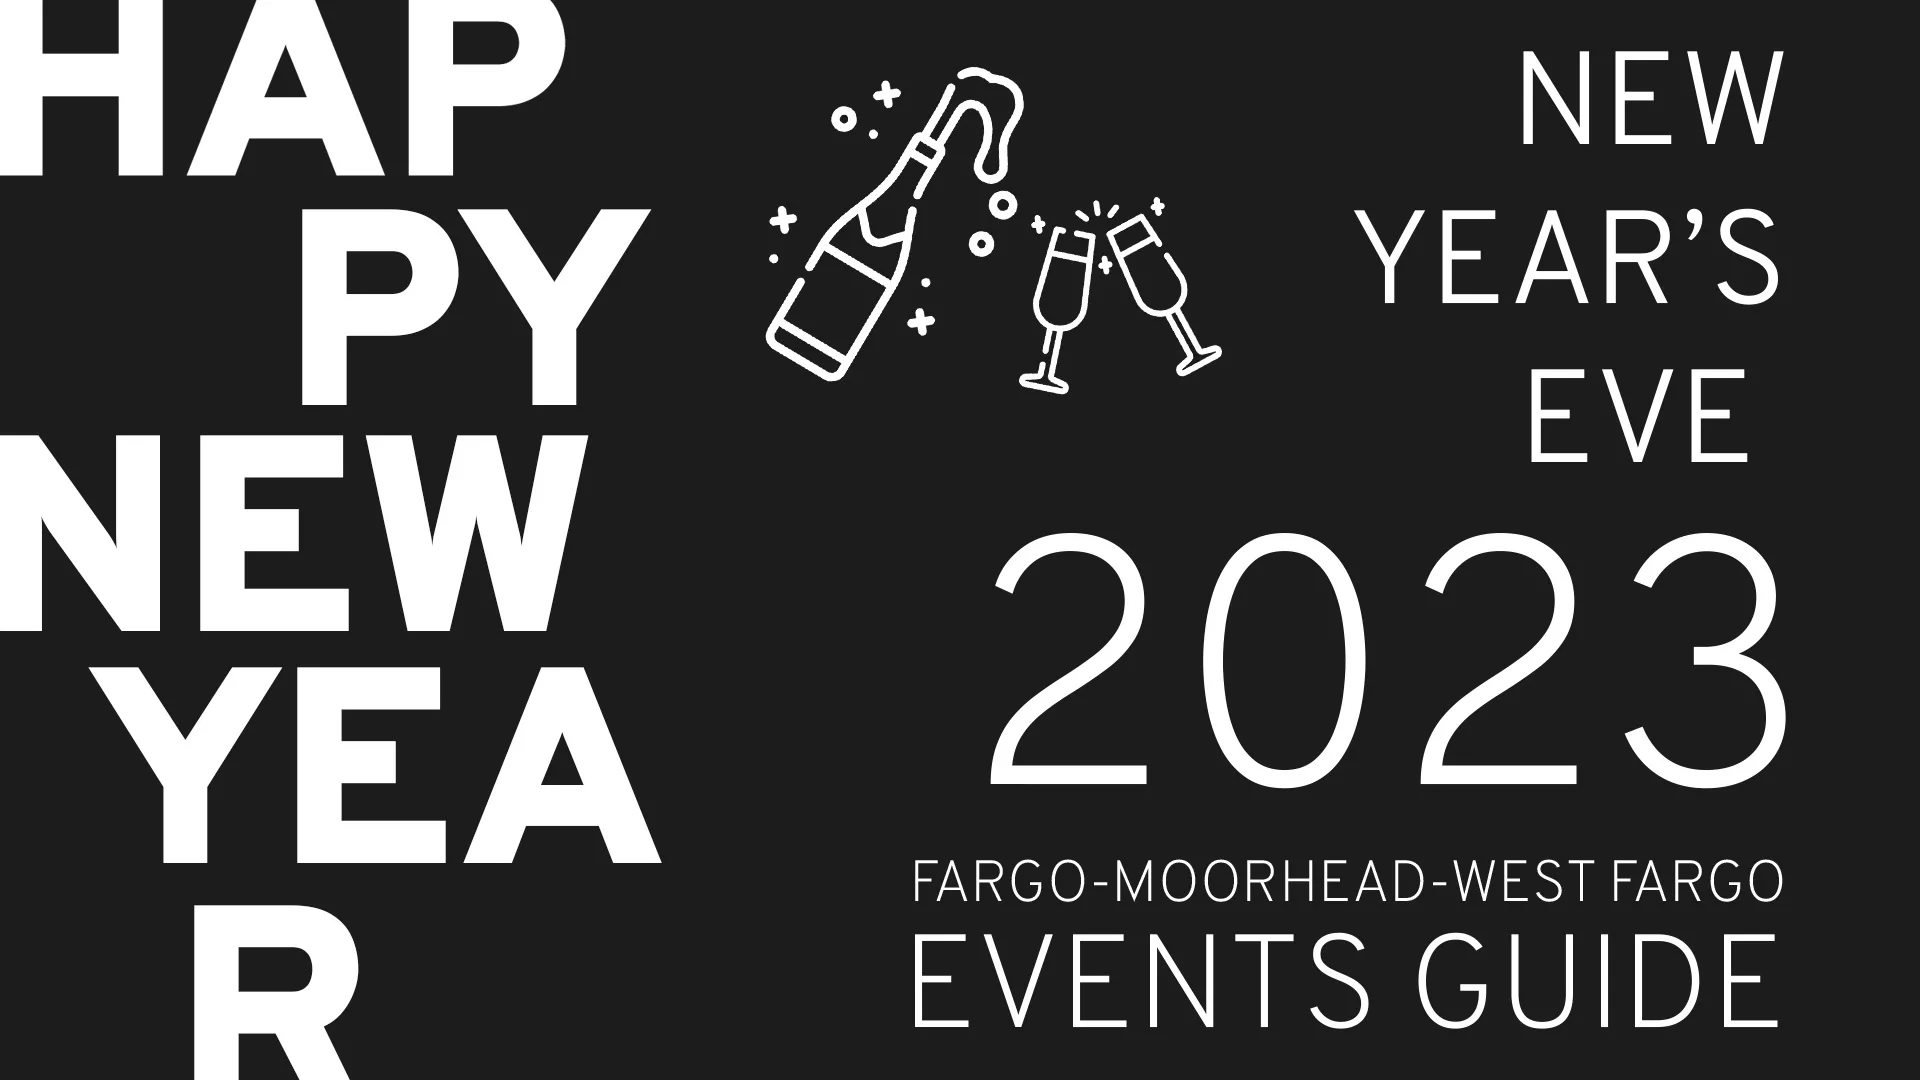 FargoMoorheadWest Fargo New Year's Eve 2022 Events Guide